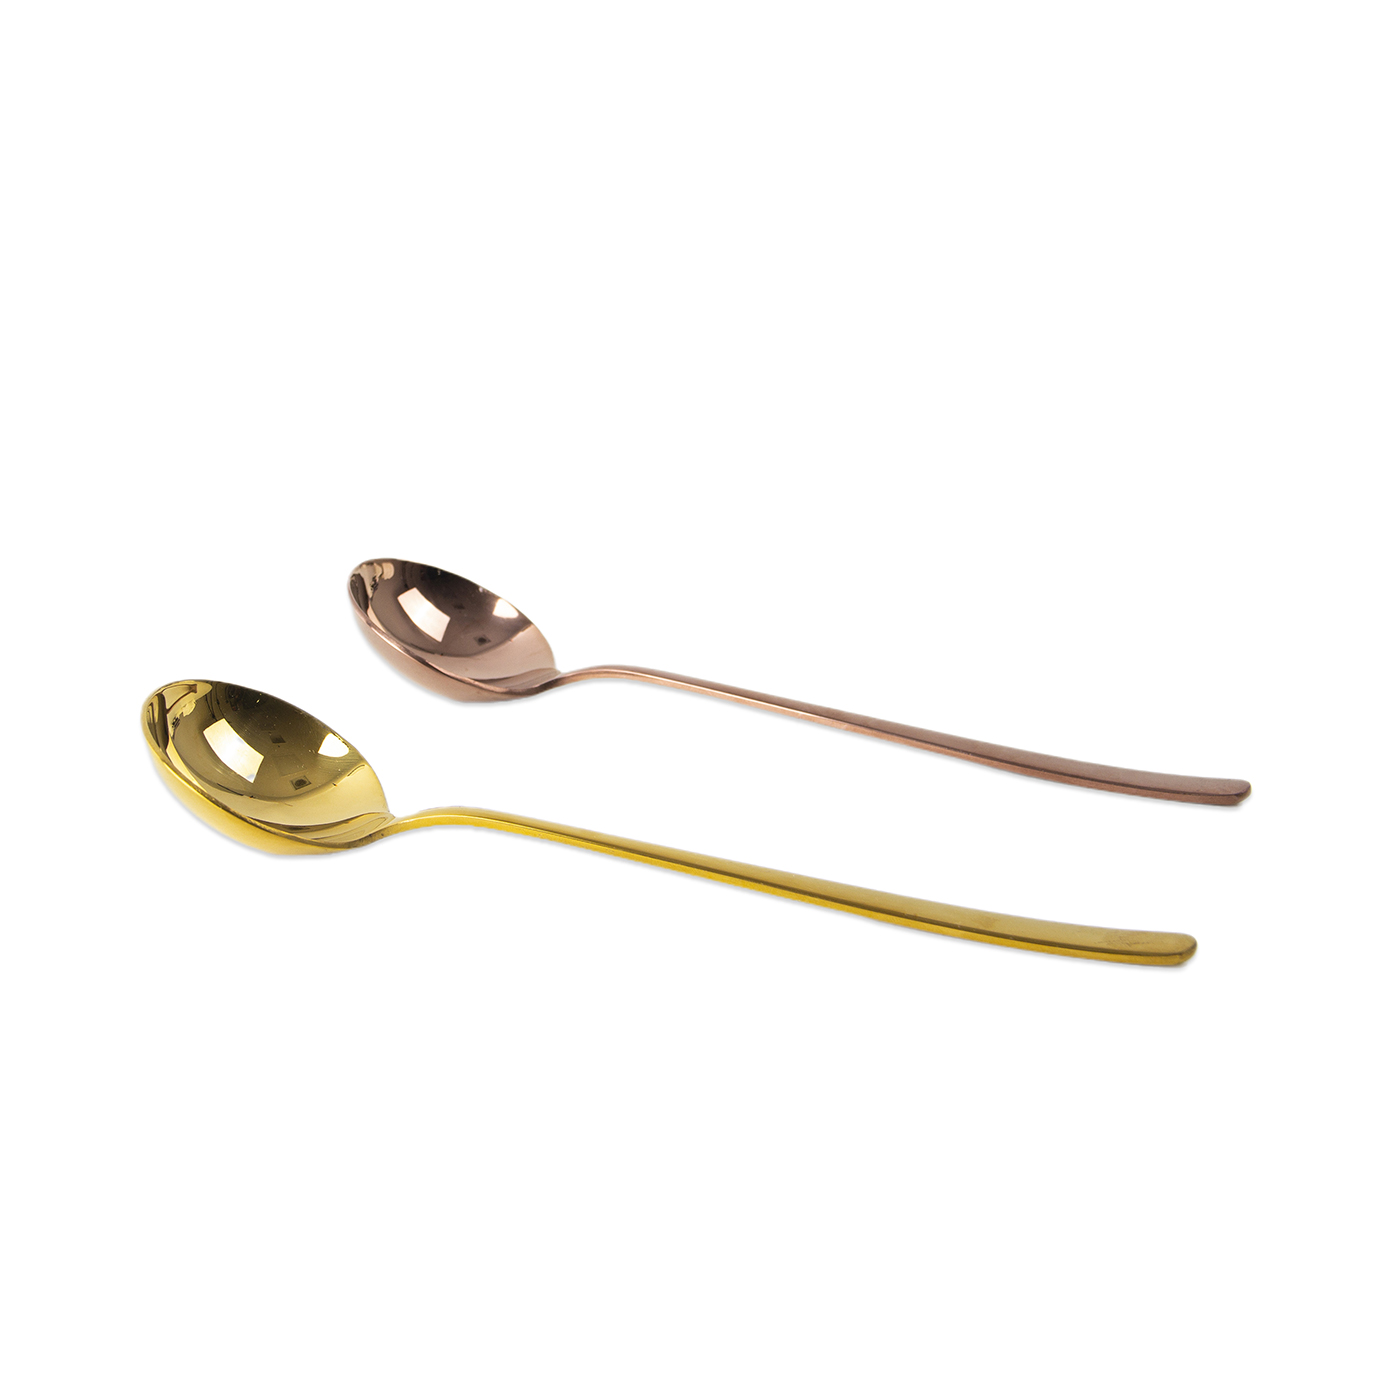 Stainless Steel Golden Round Spoon1